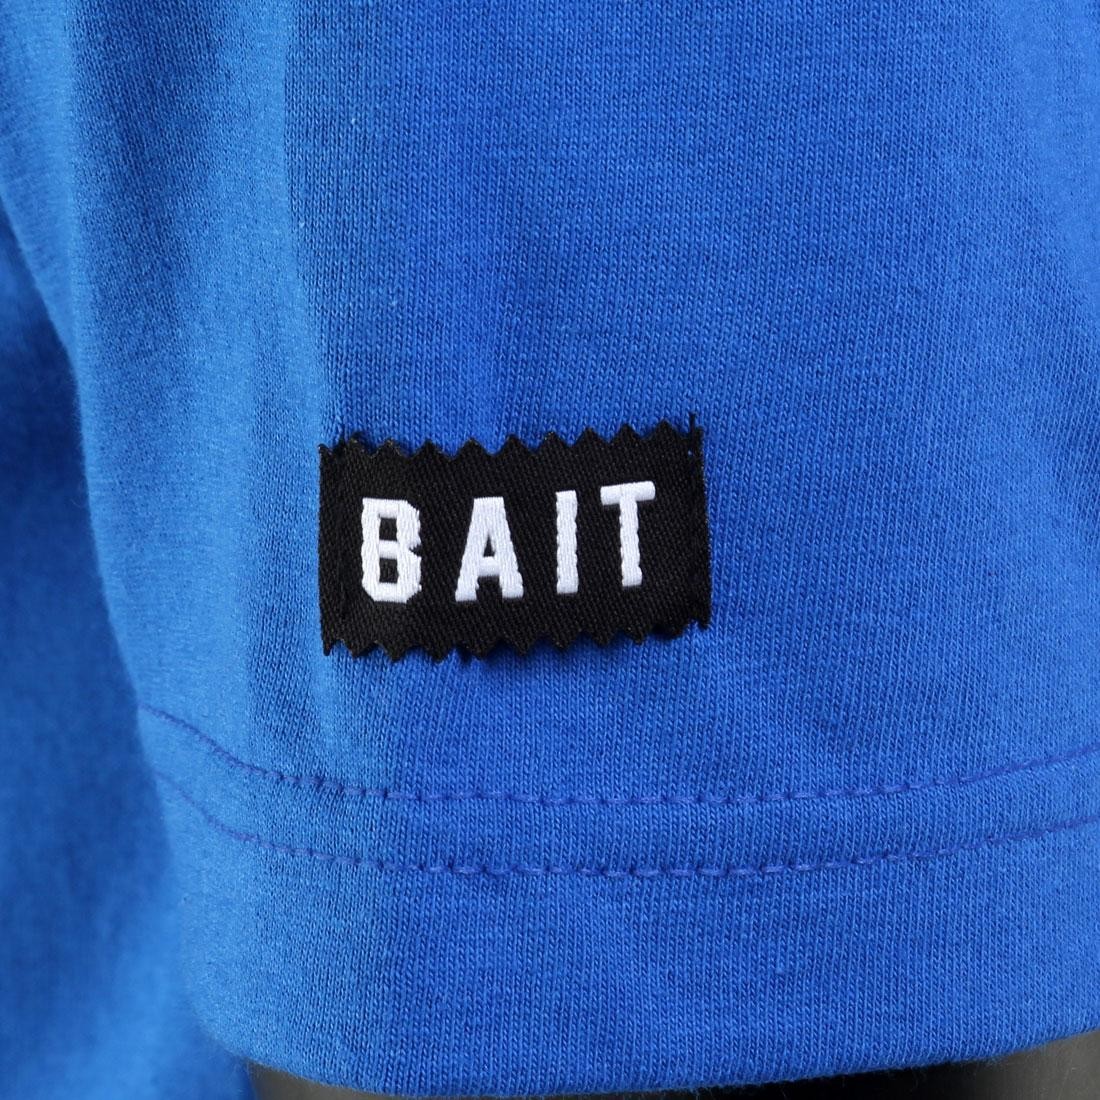 BAIT Superior BAIT Tee (blue / royal blue / white / green)